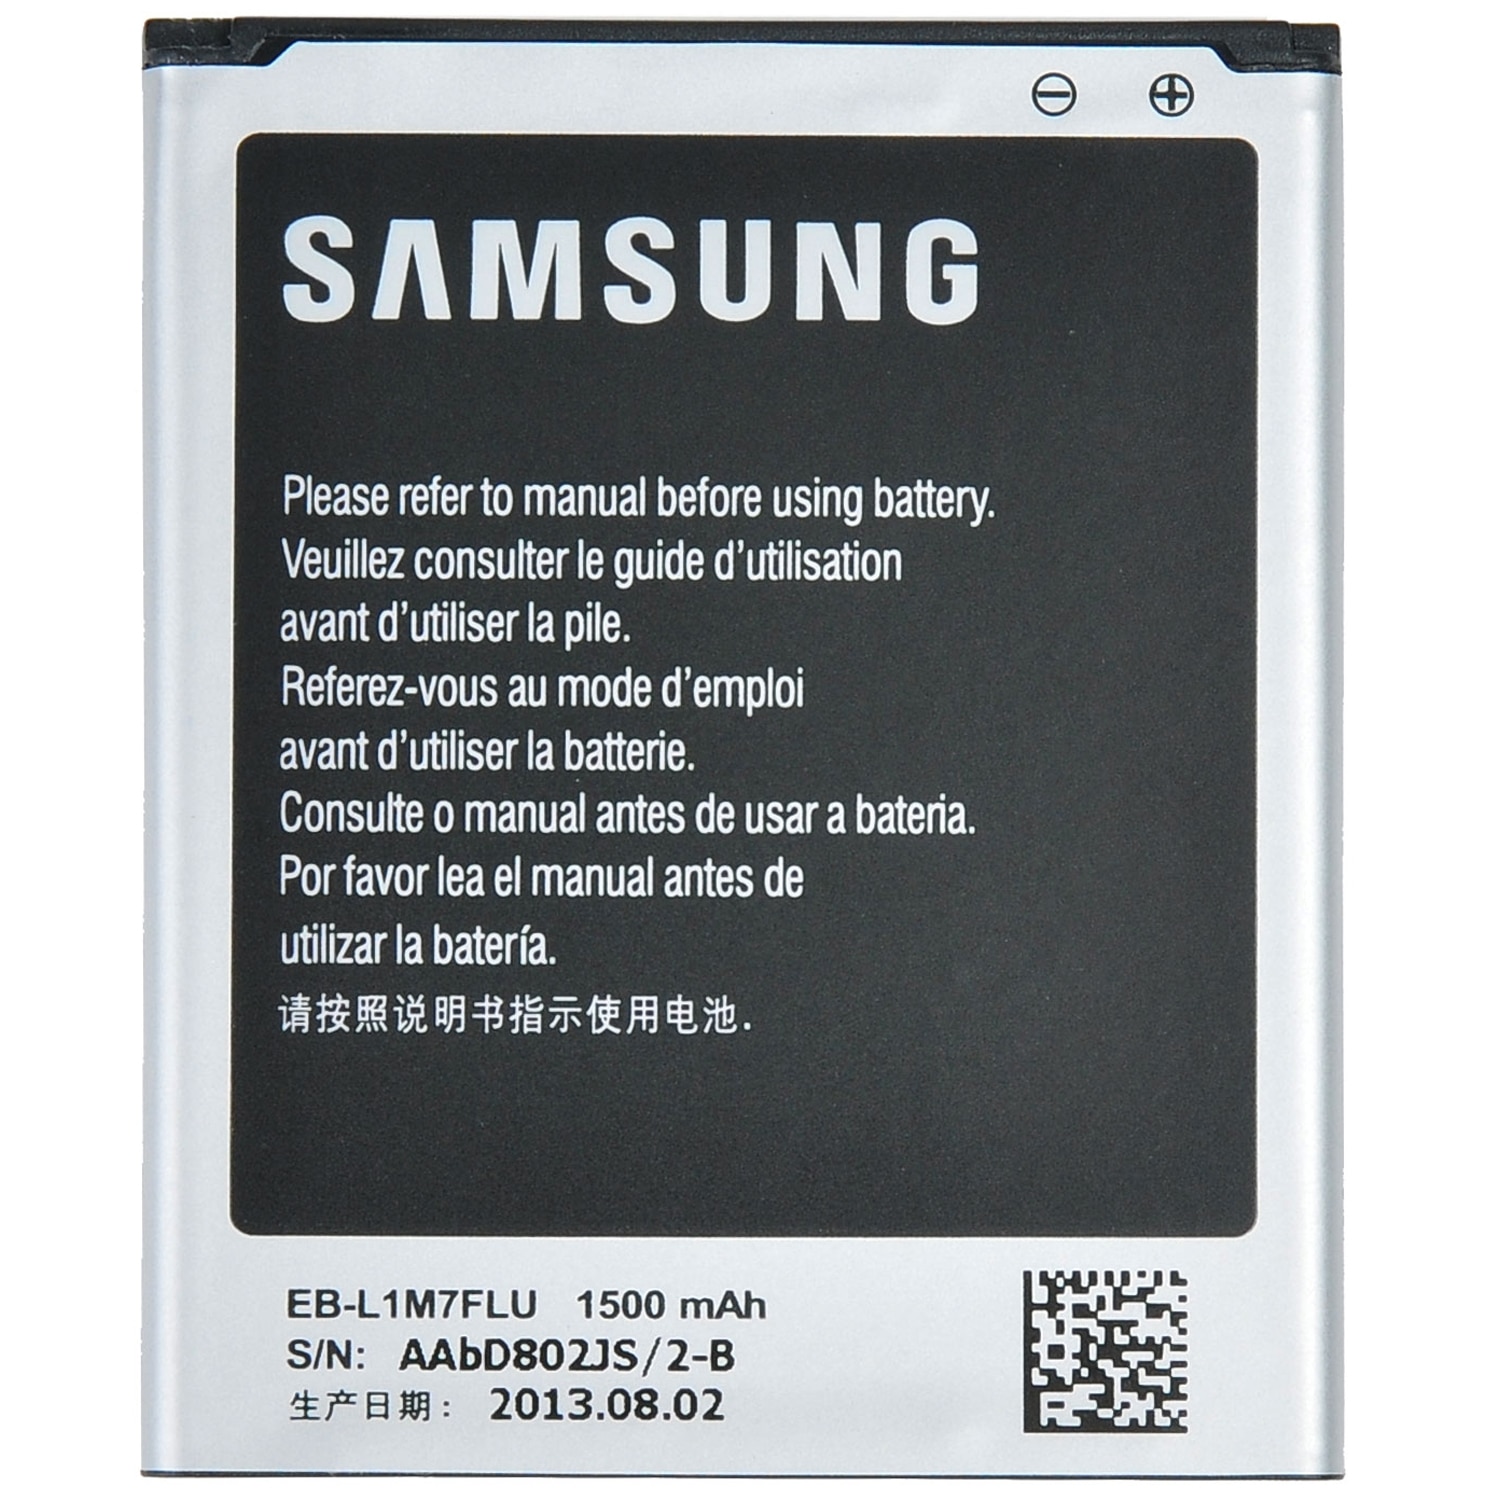 Recall Inspection drain Acumulator Samsung pentru Galaxy S3 mini,1500mAh - eMAG.ro